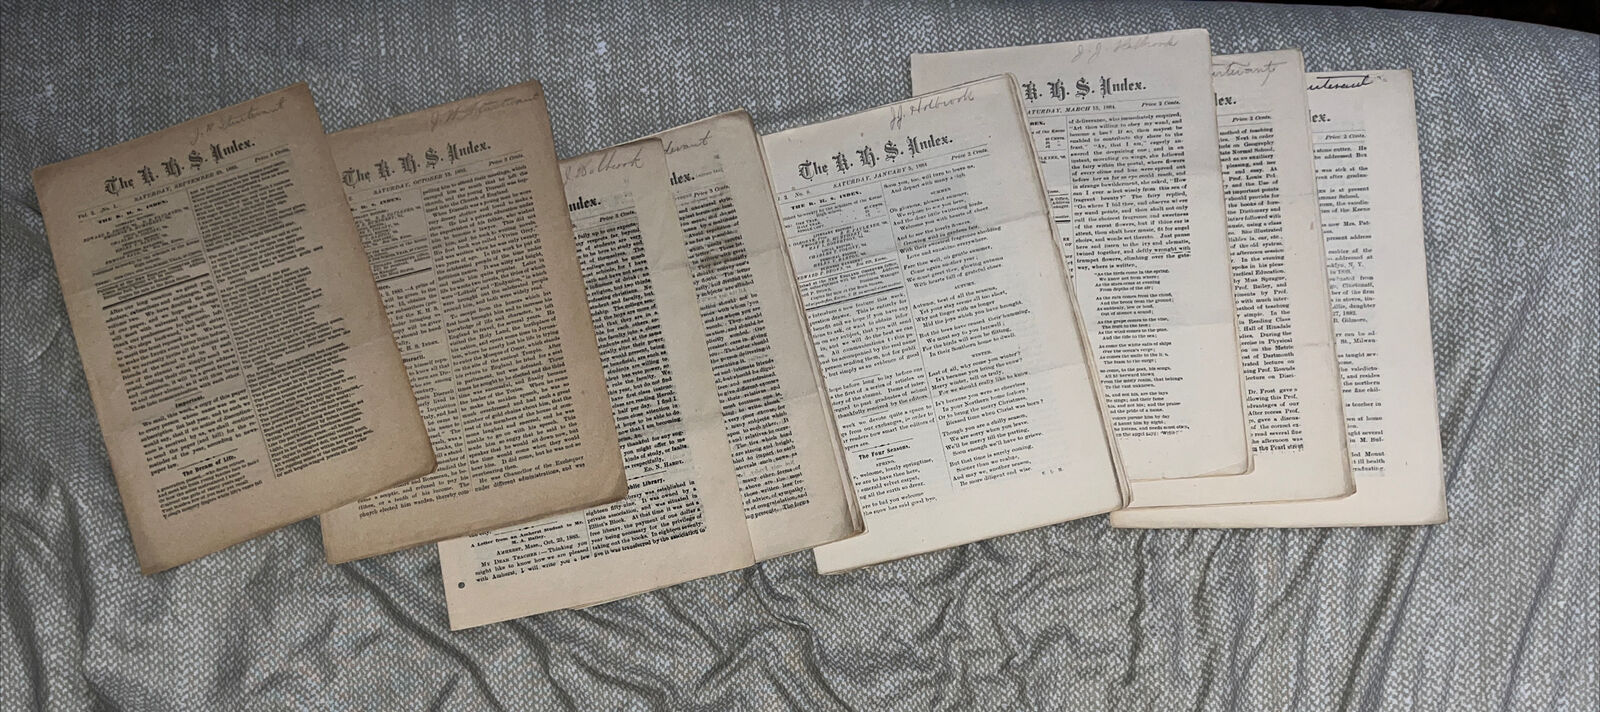 1883 Antique Keene NH High School KHS Index Vol 2, No 1 - 18 Issues Essays &More